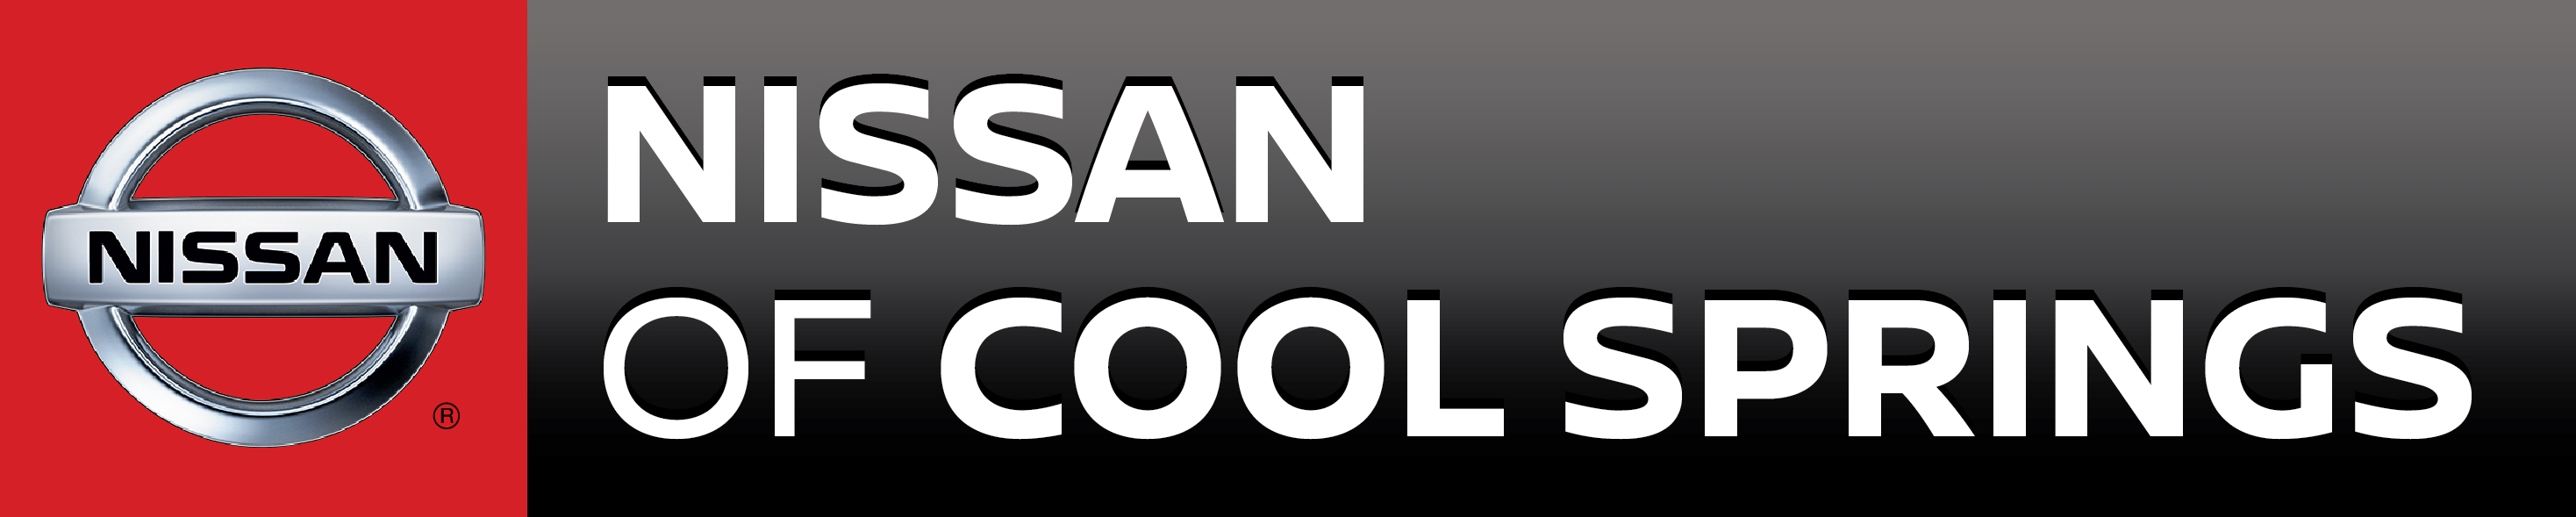 Nissan CoolSprings Logo 2016